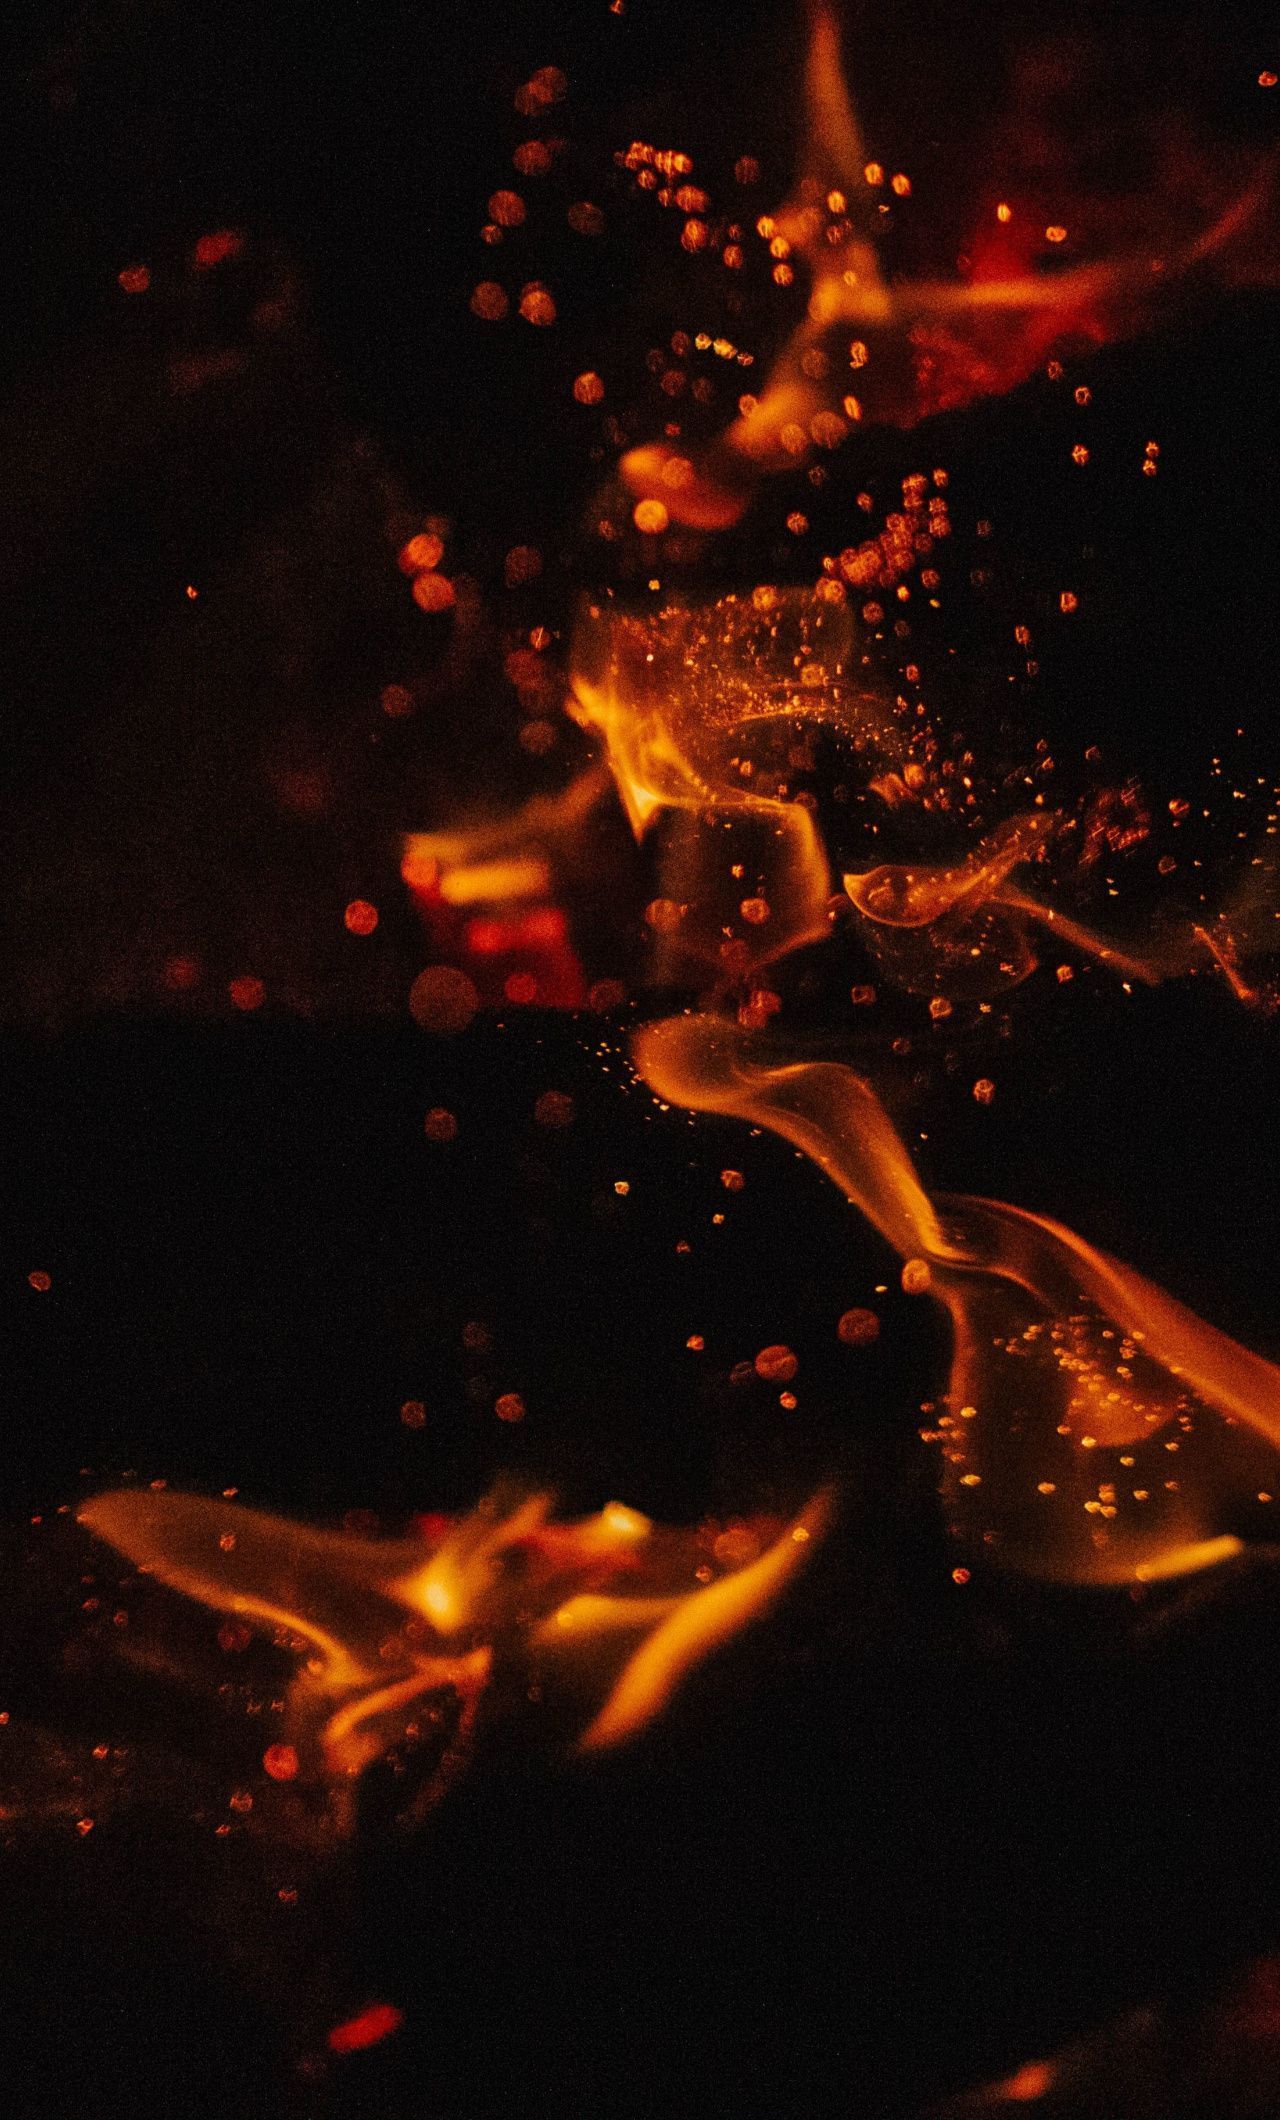 Dark, fire, orange flames wallpaper di 2020